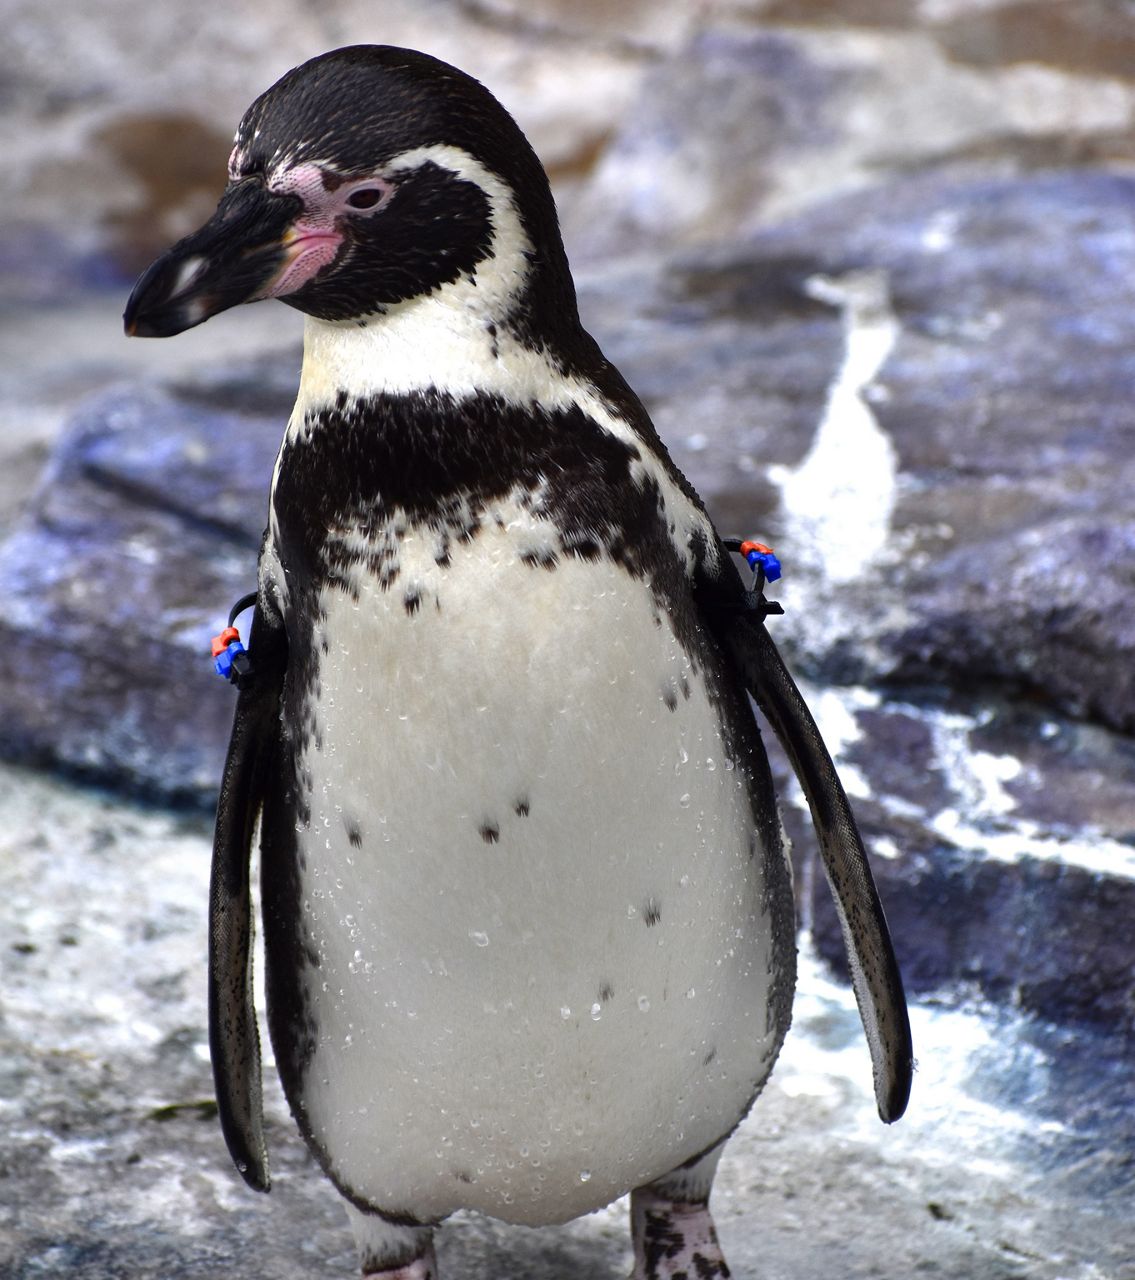 a Humboldt penguin